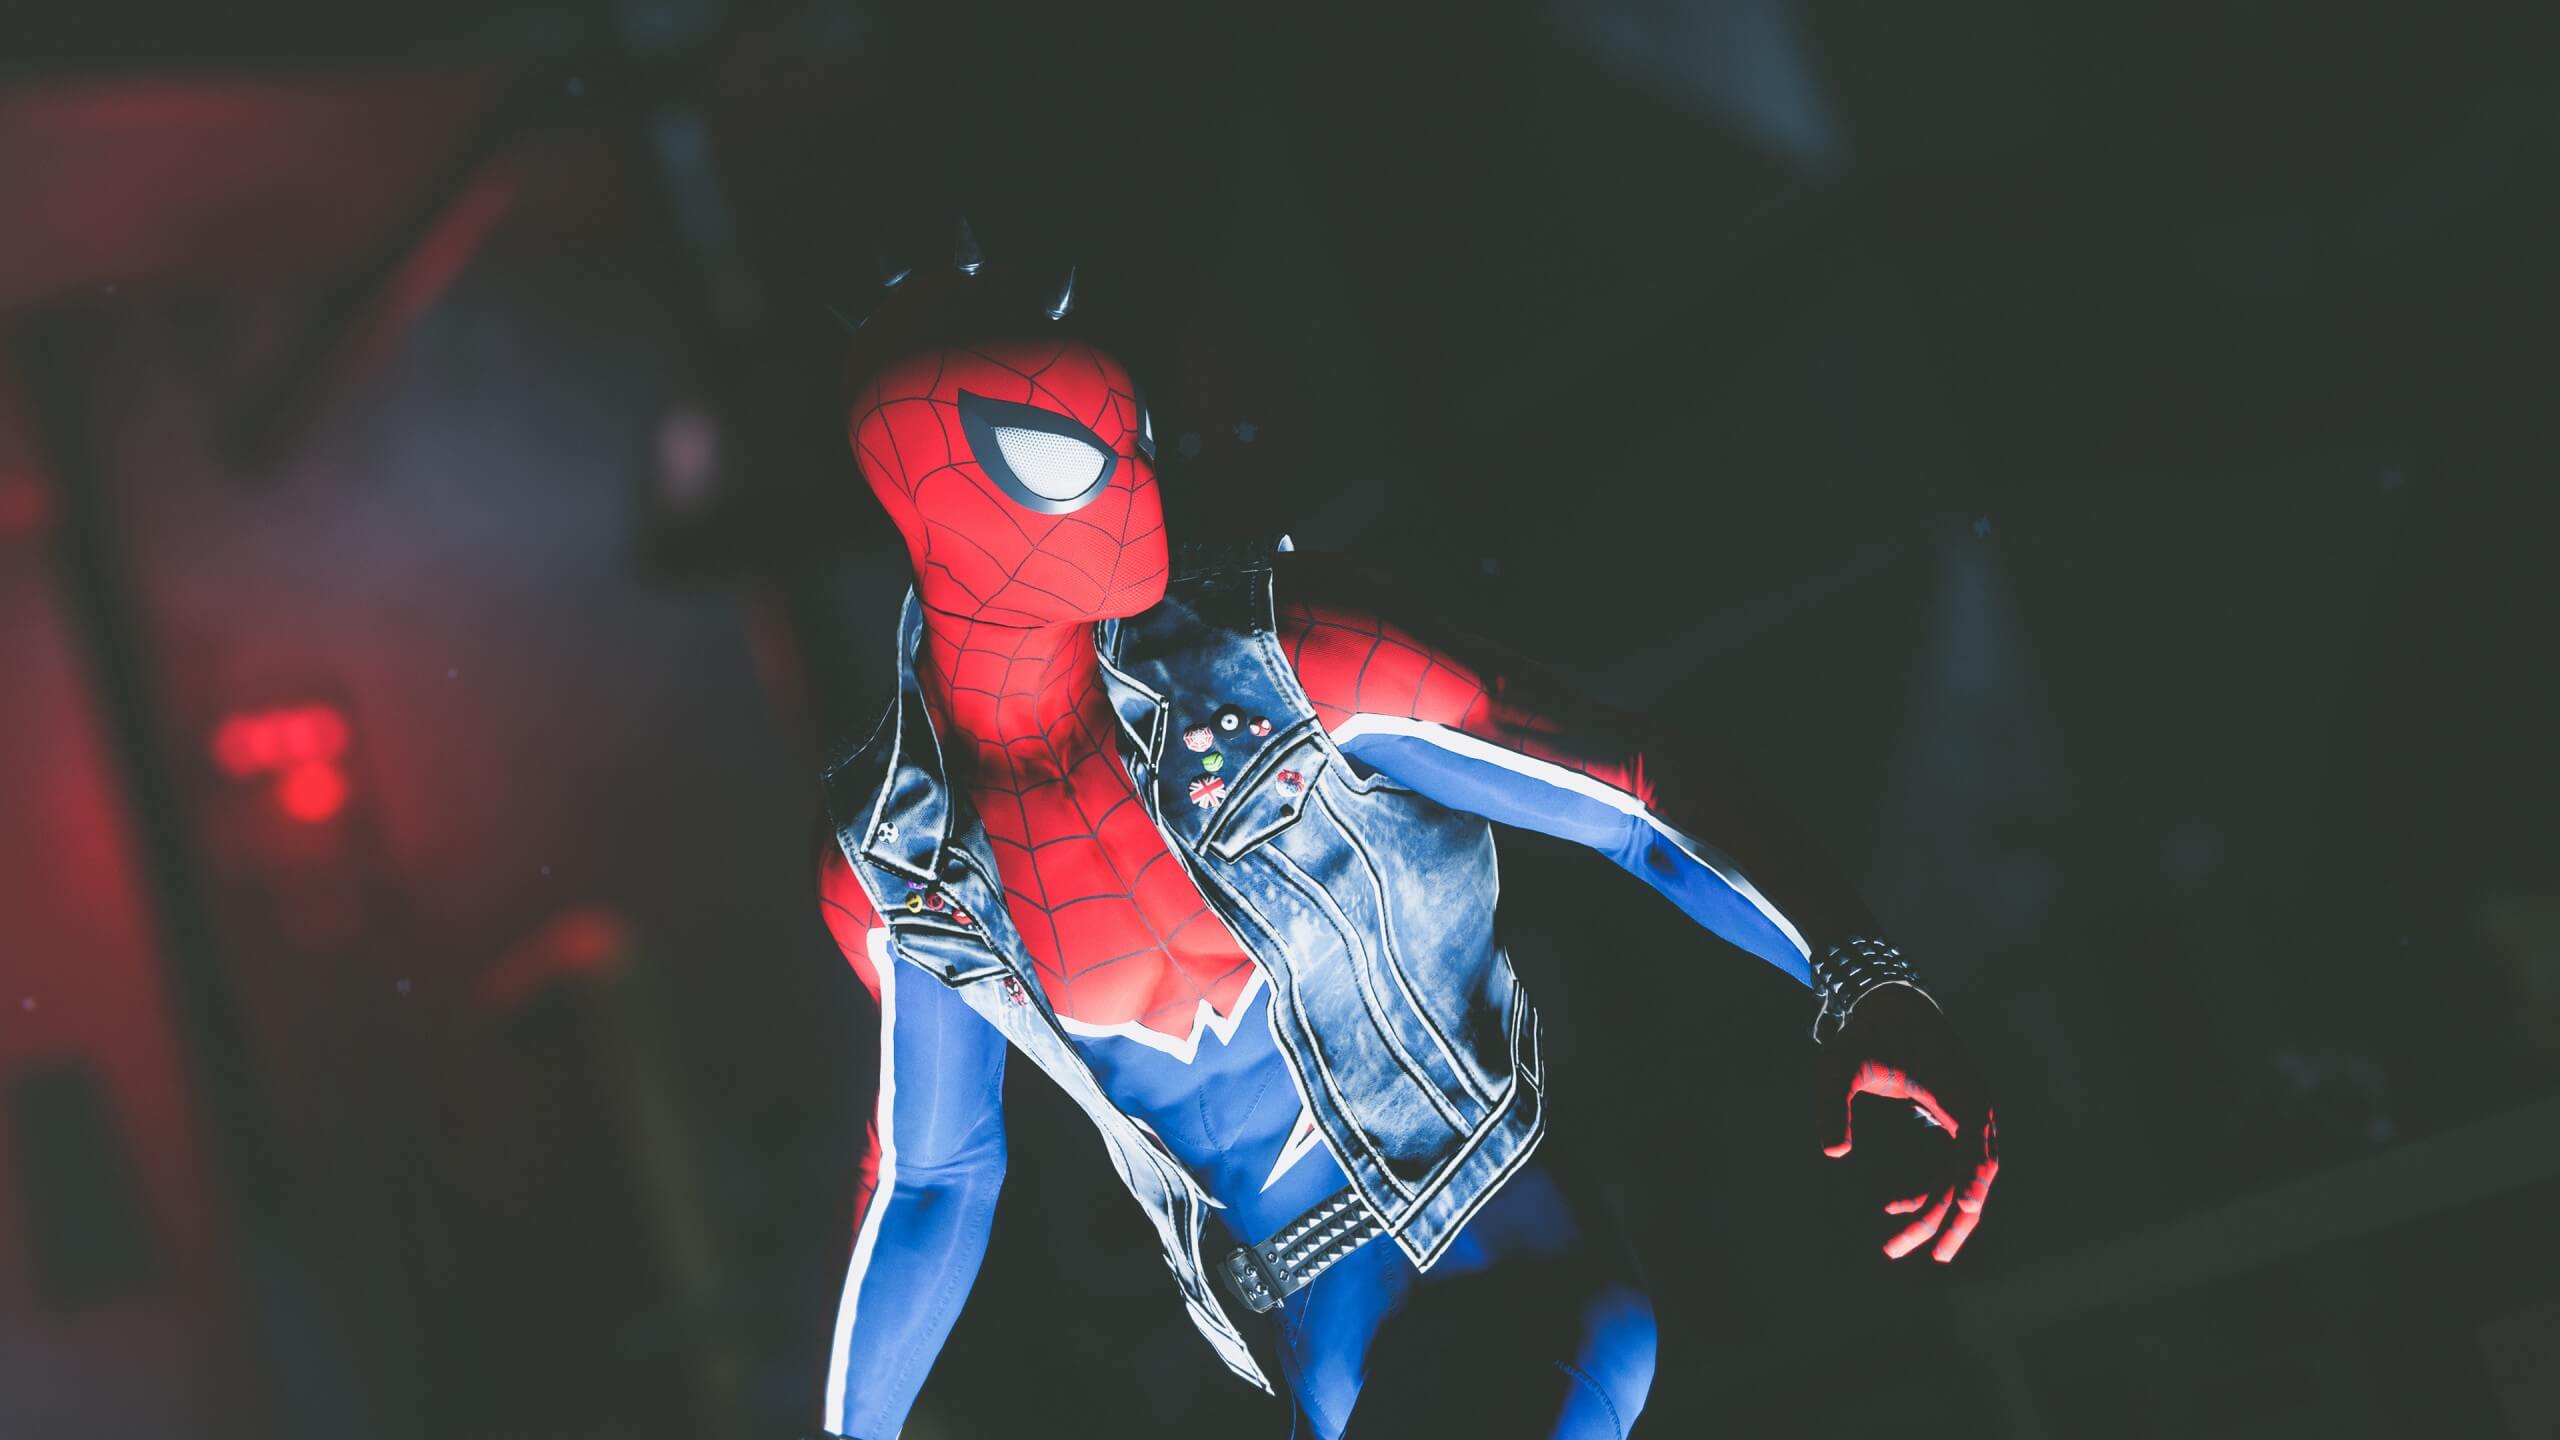 Spider Man PS4 Game 4K Wallpaper